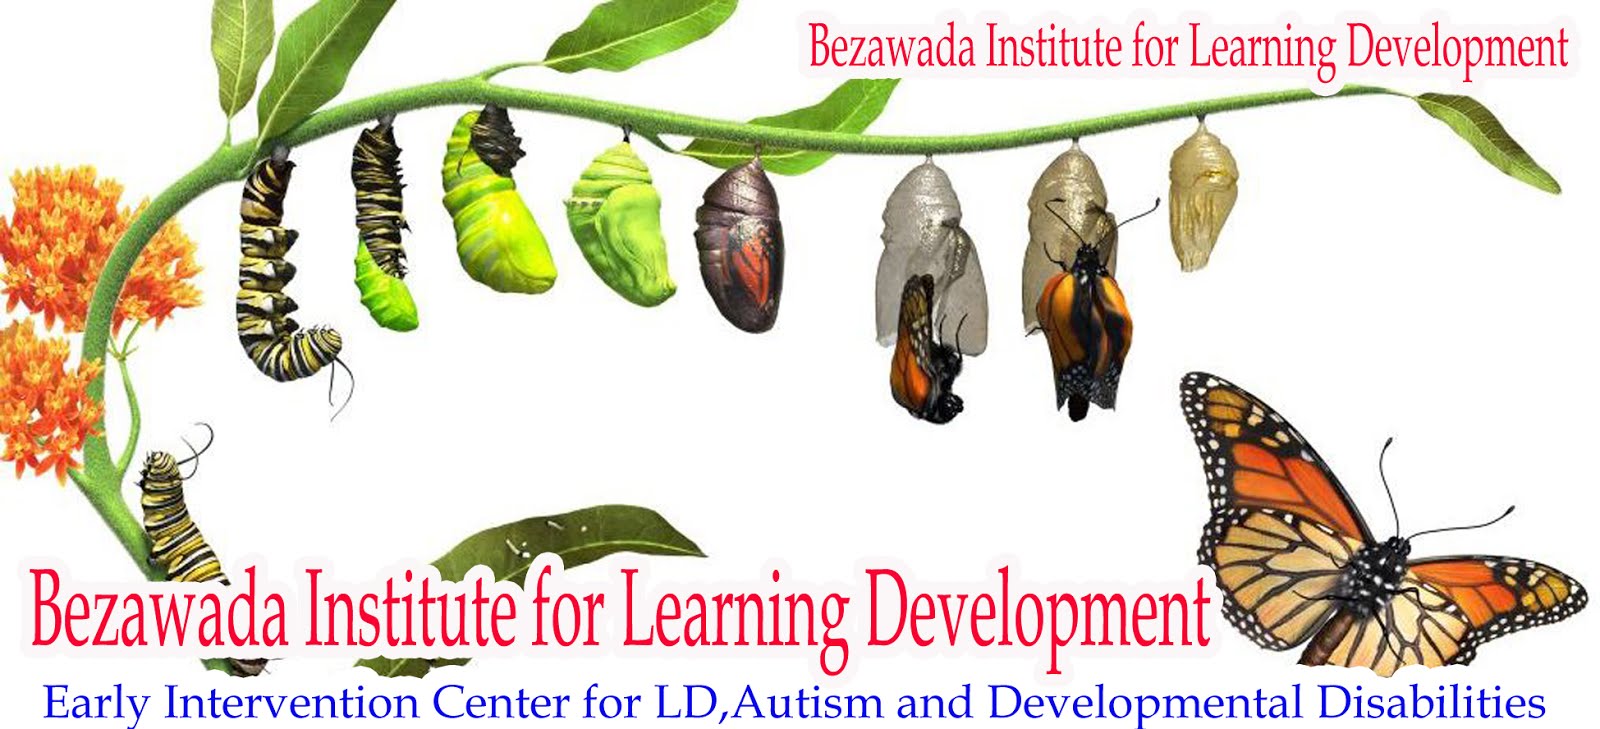 Bezawada Institute for Learning Development 